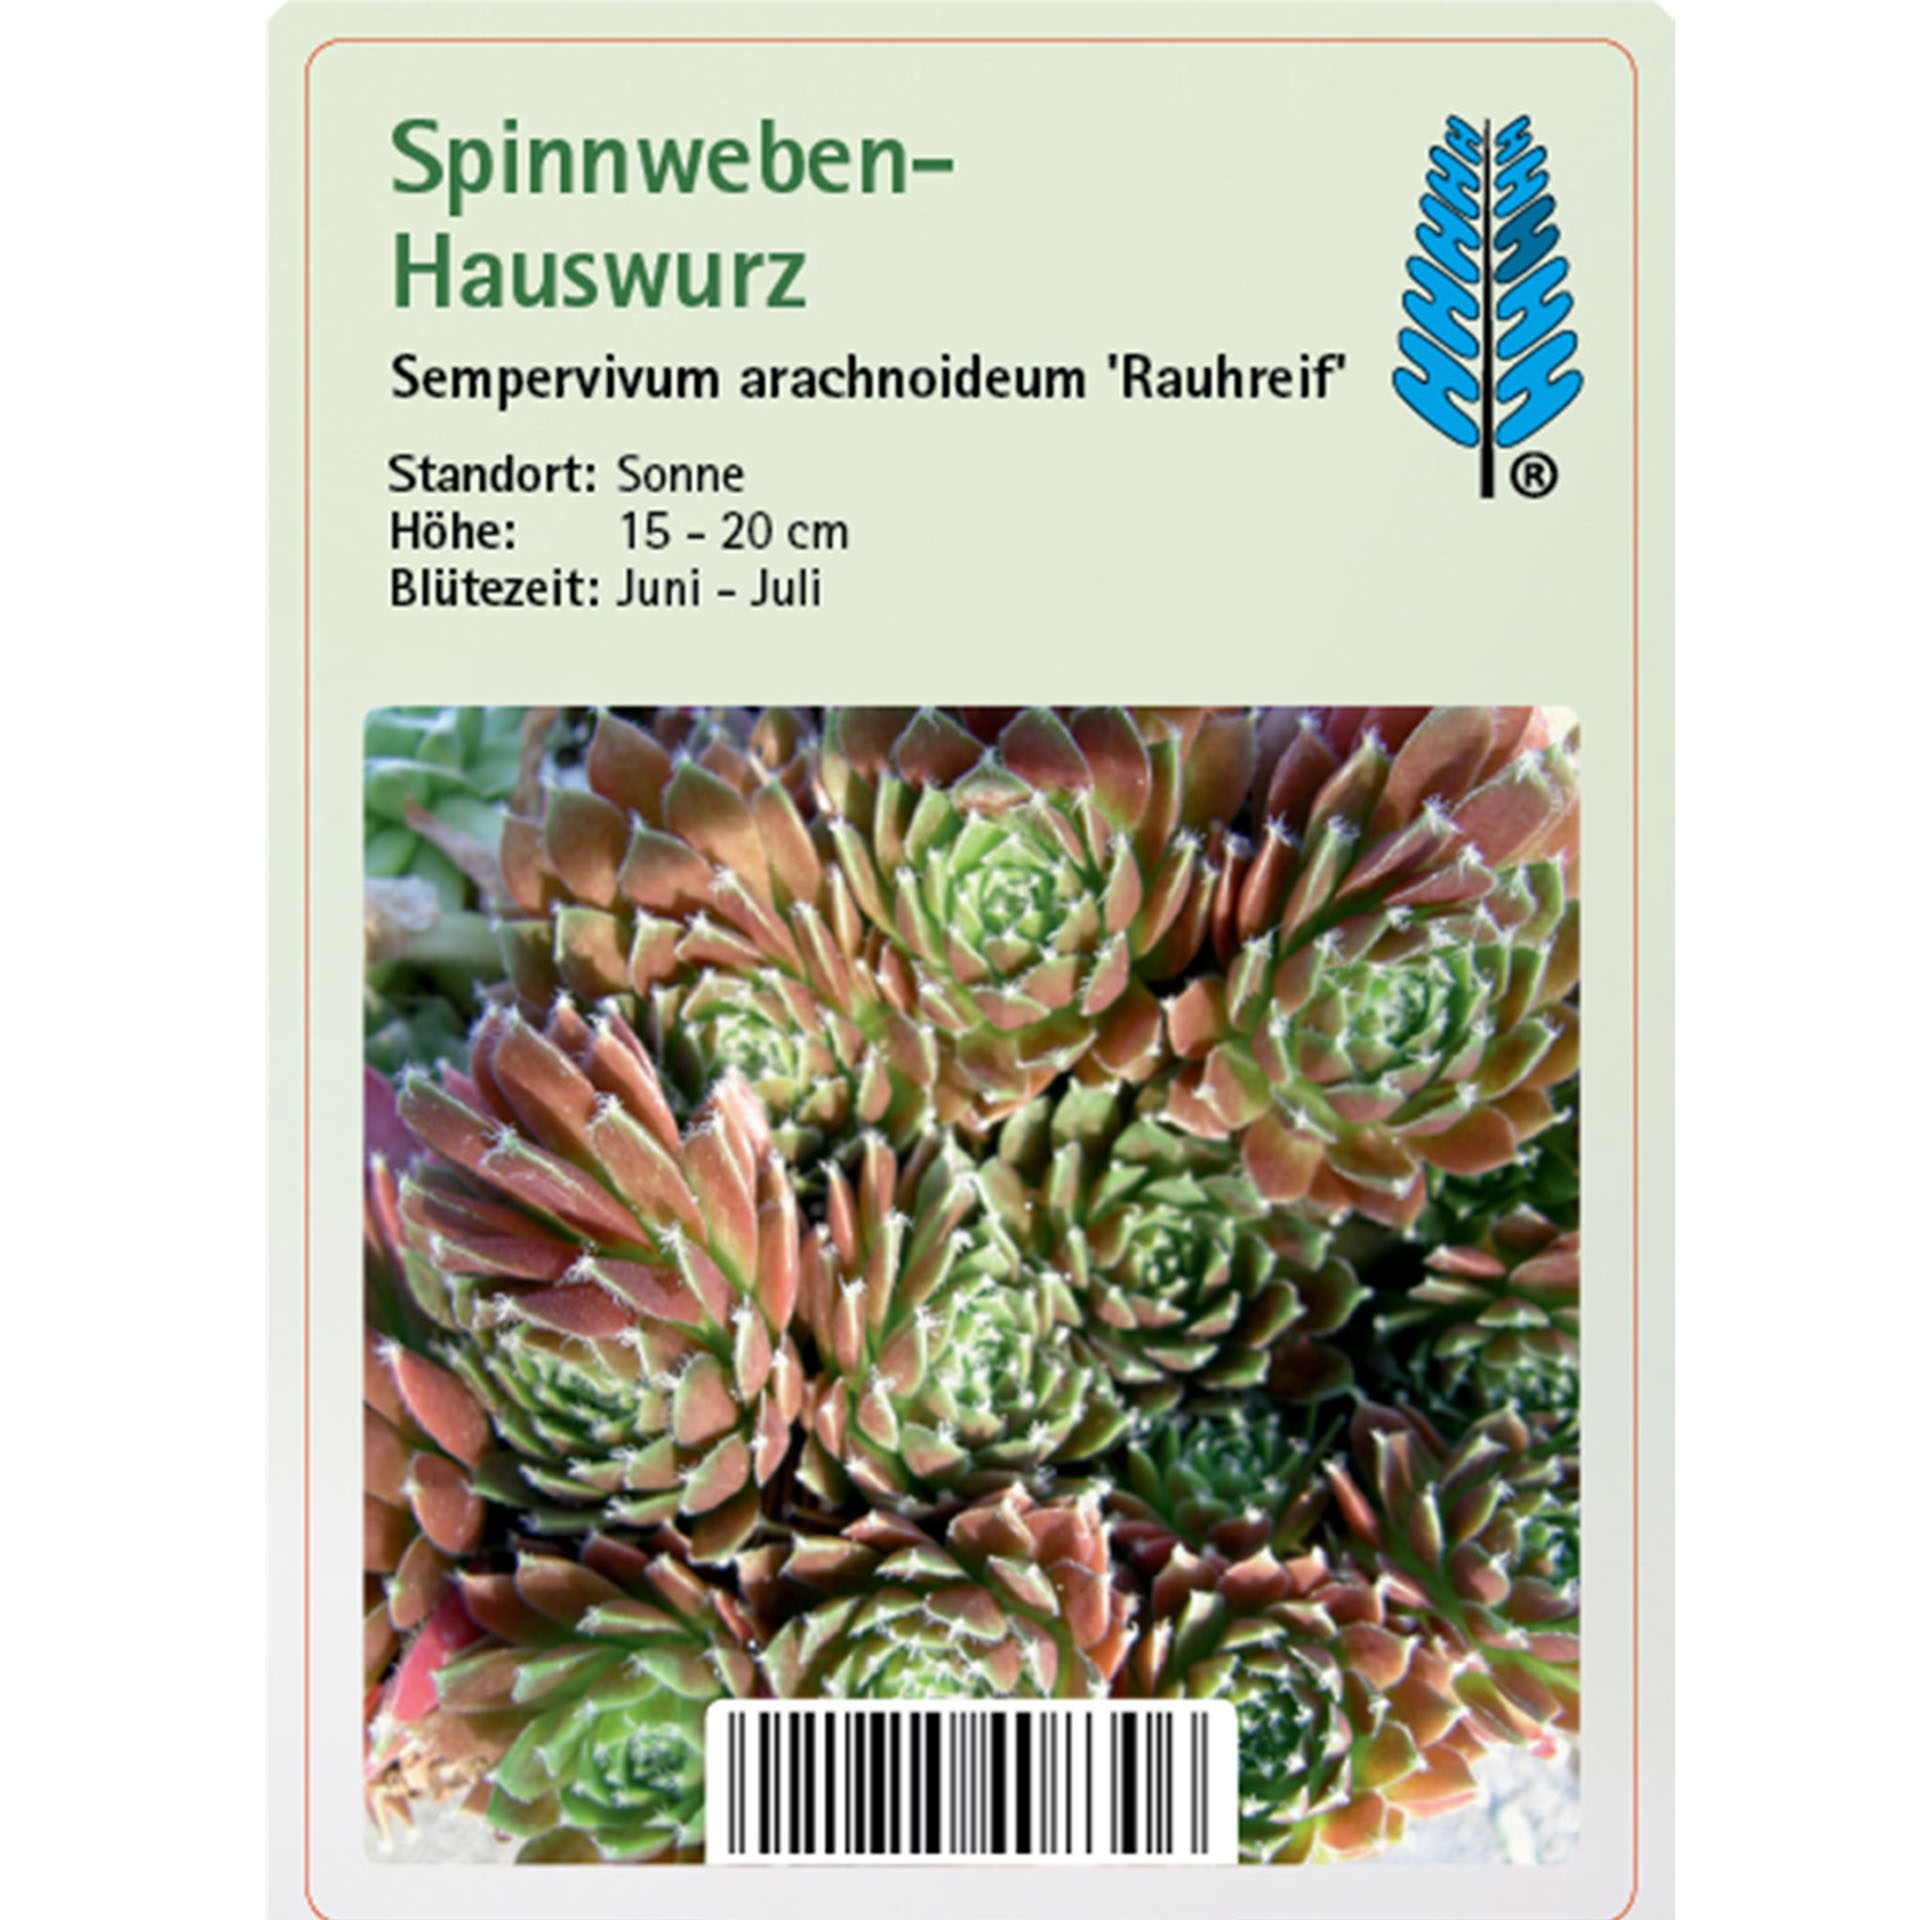 Spinnweben-Hauswurz - Sempervivum arachnoideum 'Rauhreif', 9cm Topf